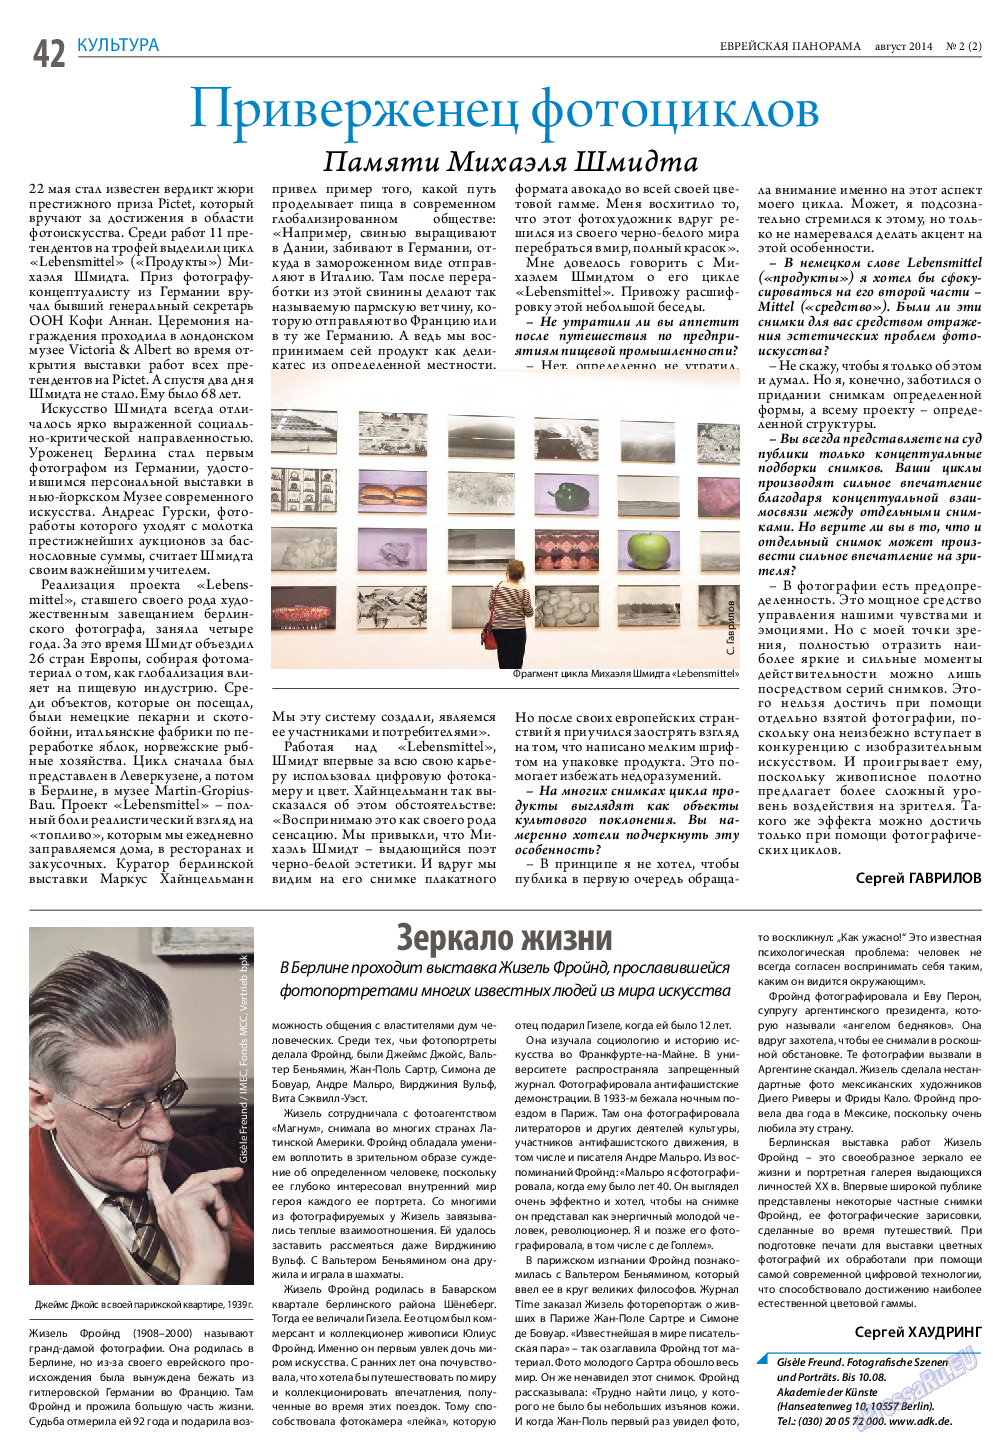 Еврейская панорама, газета. 2014 №2 стр.42